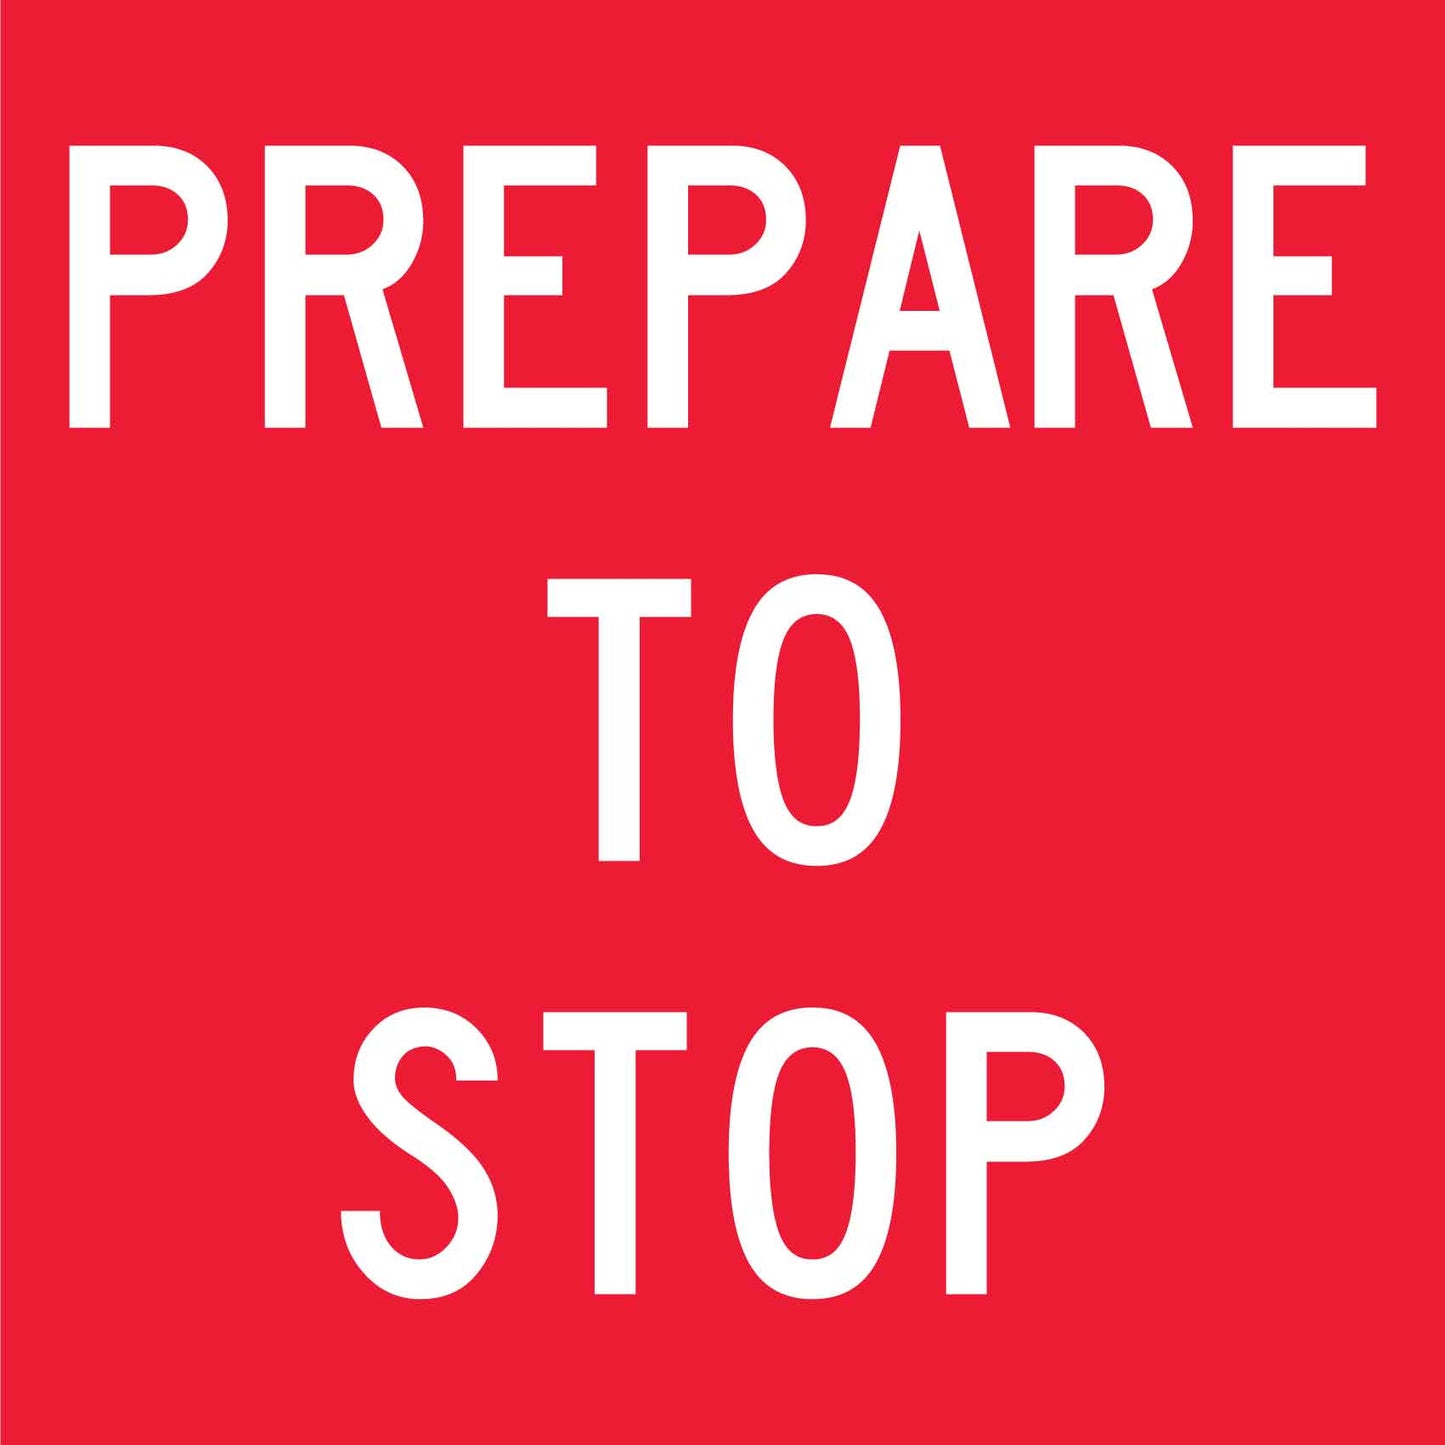 Prepare To Stop Multi Message Reflective Traffic Sign